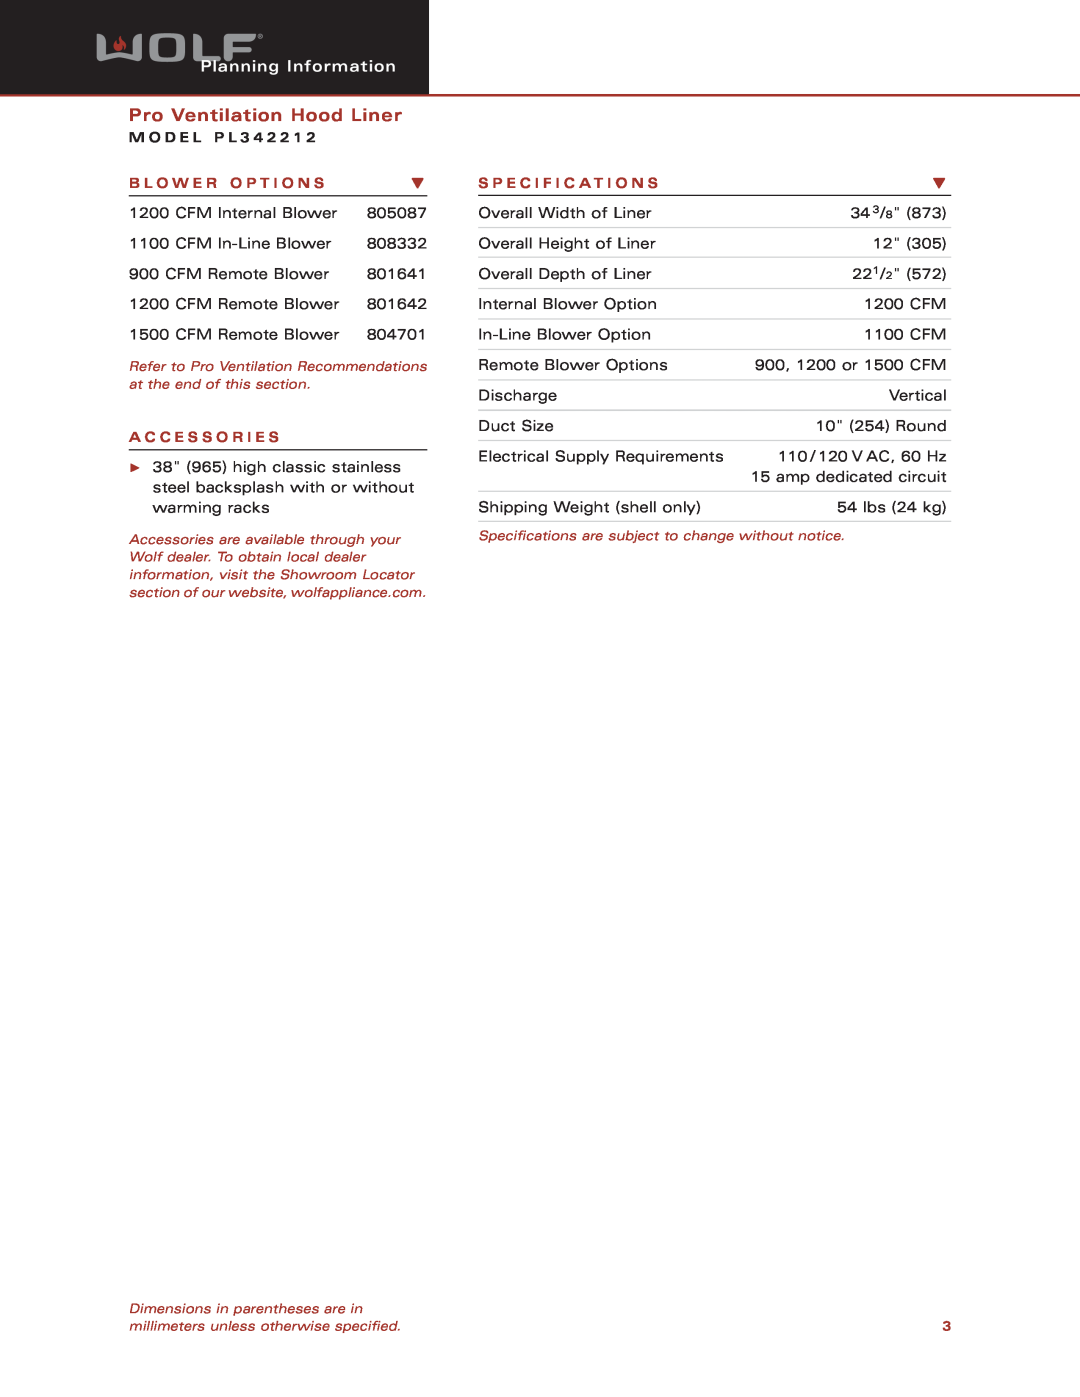 Wolf Appliance Company PL342212 Pro Ventilation Hood Liner, Planning Information, M O D E L P L 3 4, A C C E S S O R I E S 